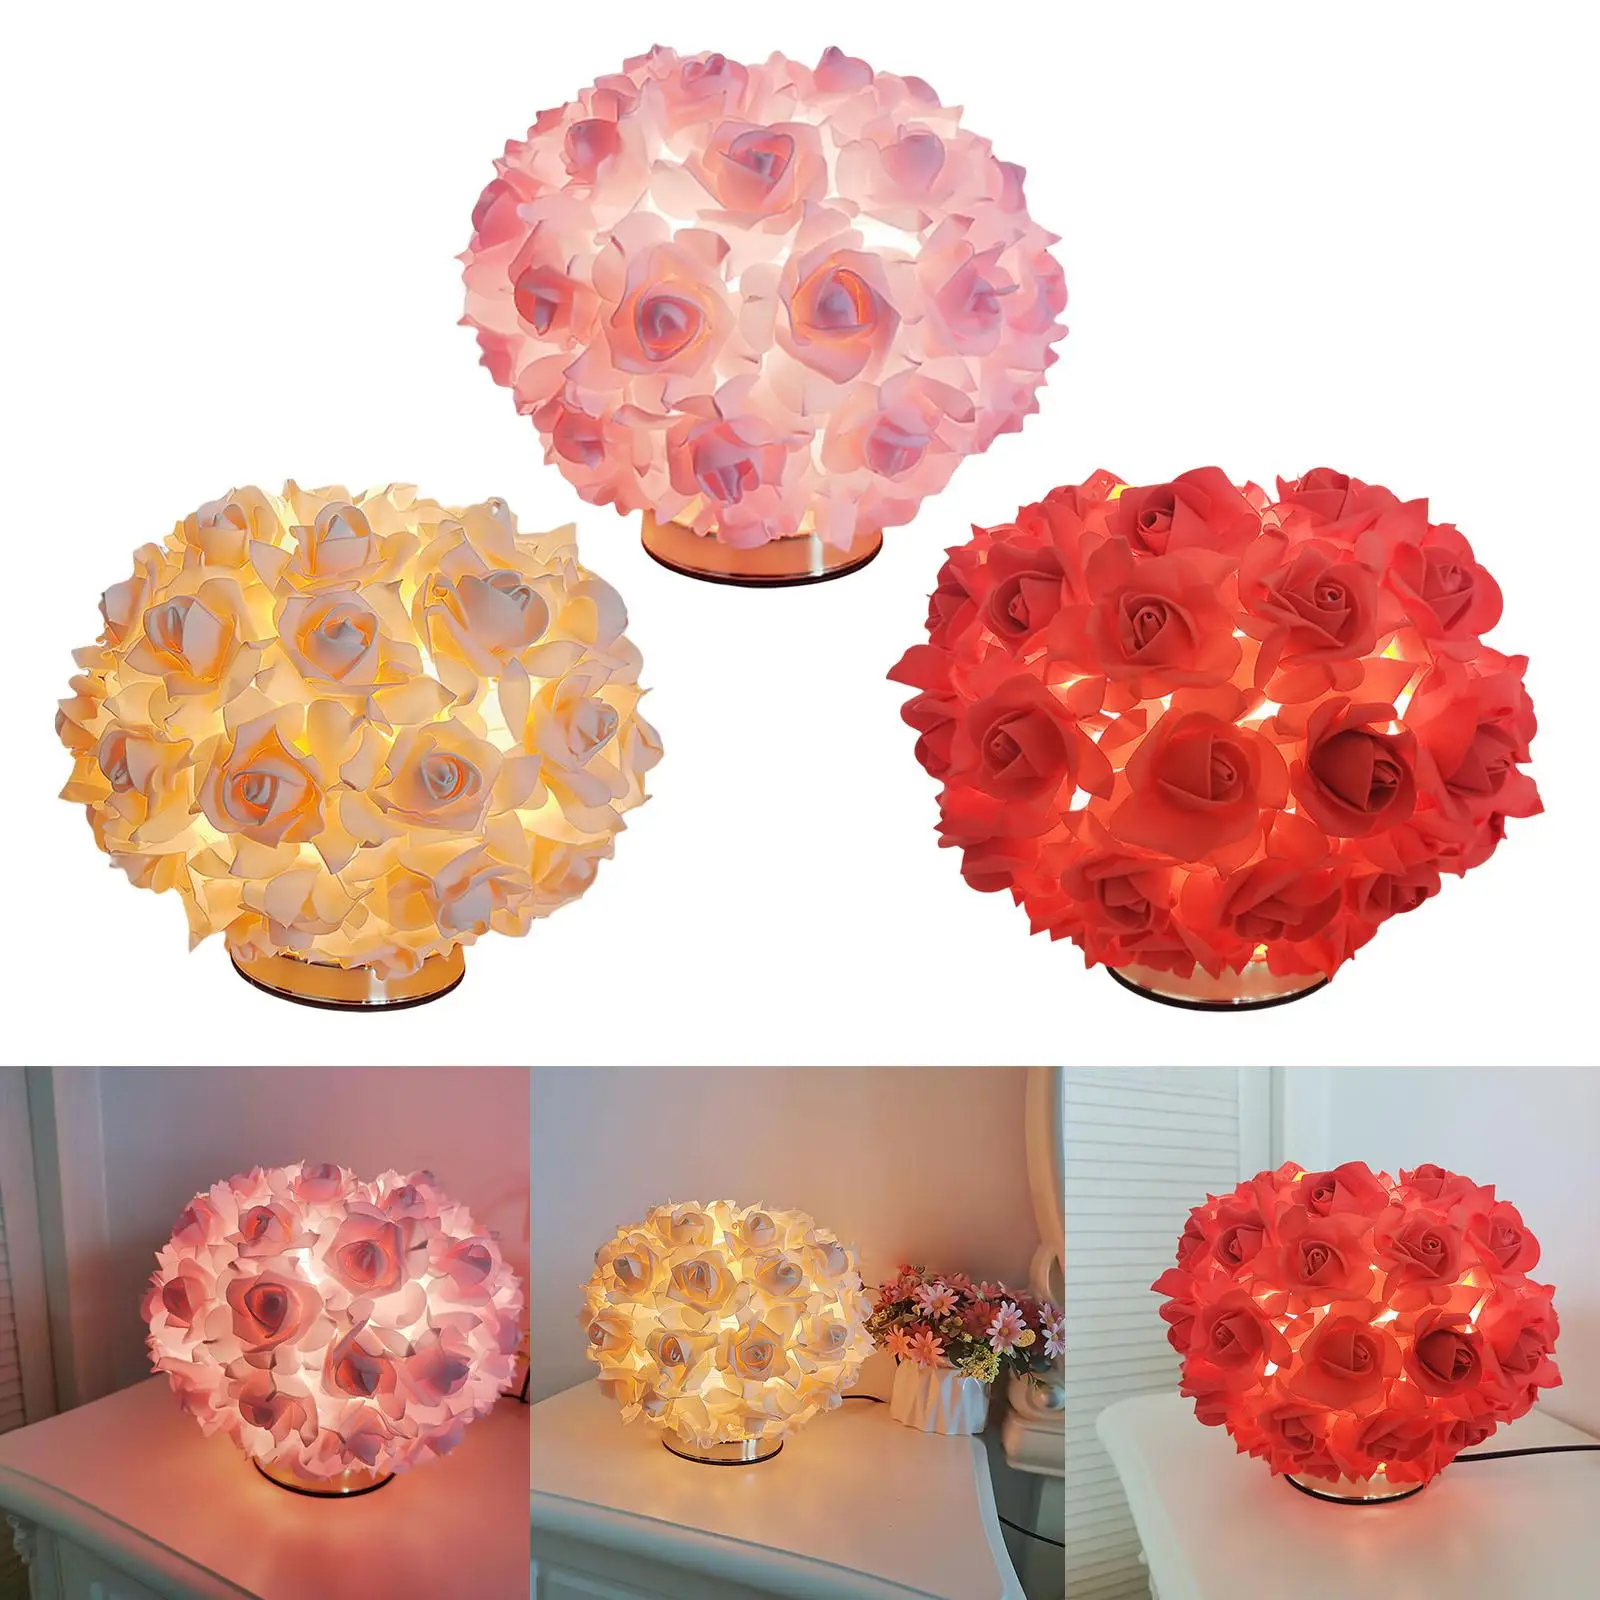 Flower Decorative Bedside Table Lamp LED Nightlight Desk Lamp Flower Lampshade Lighting for Table Bars Sofa Dorm Party